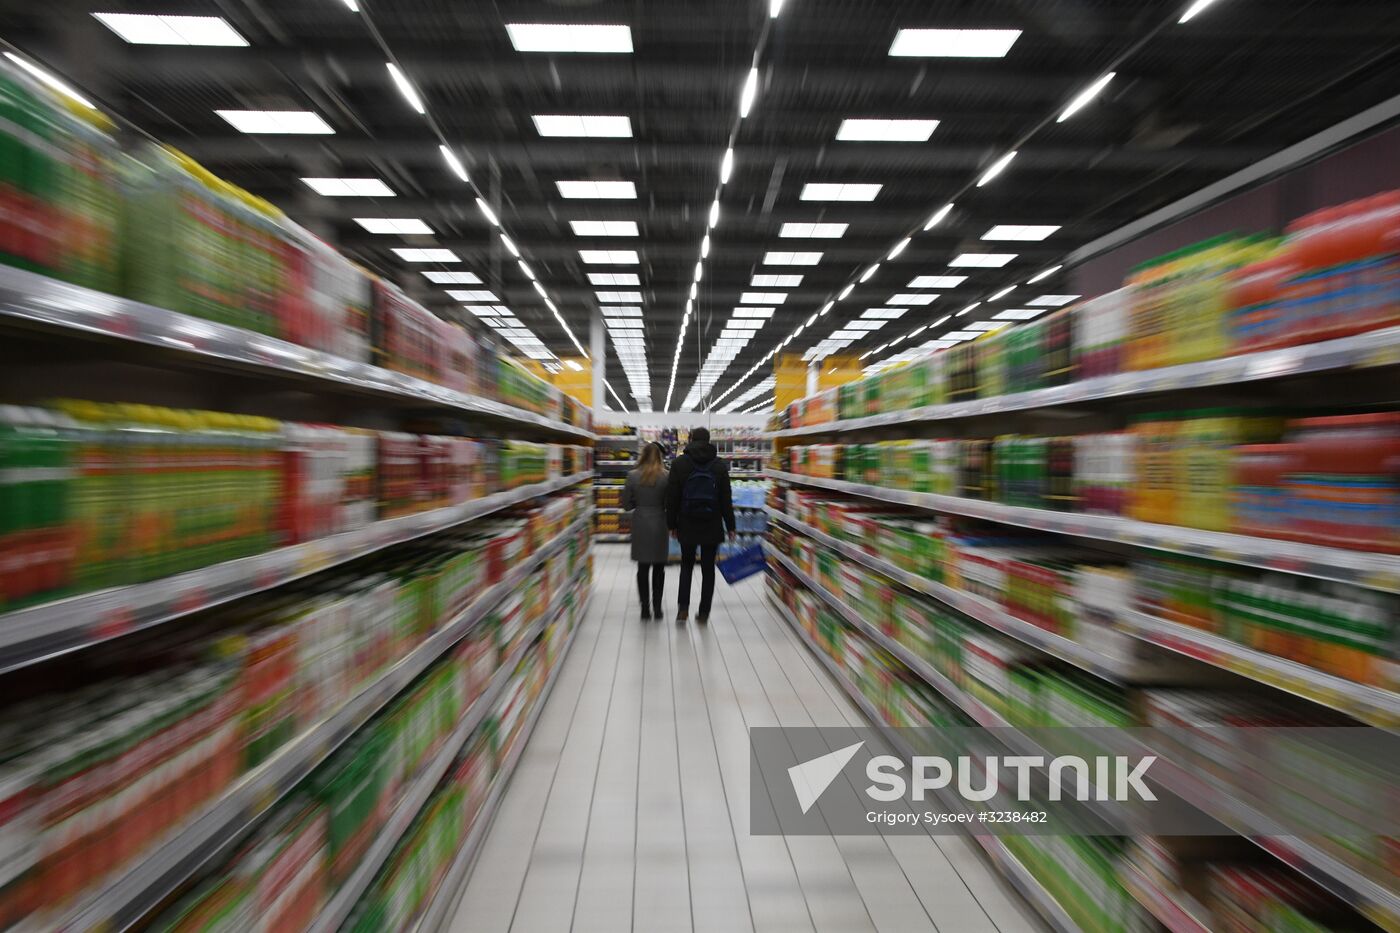 Lenta retail chain supermarket